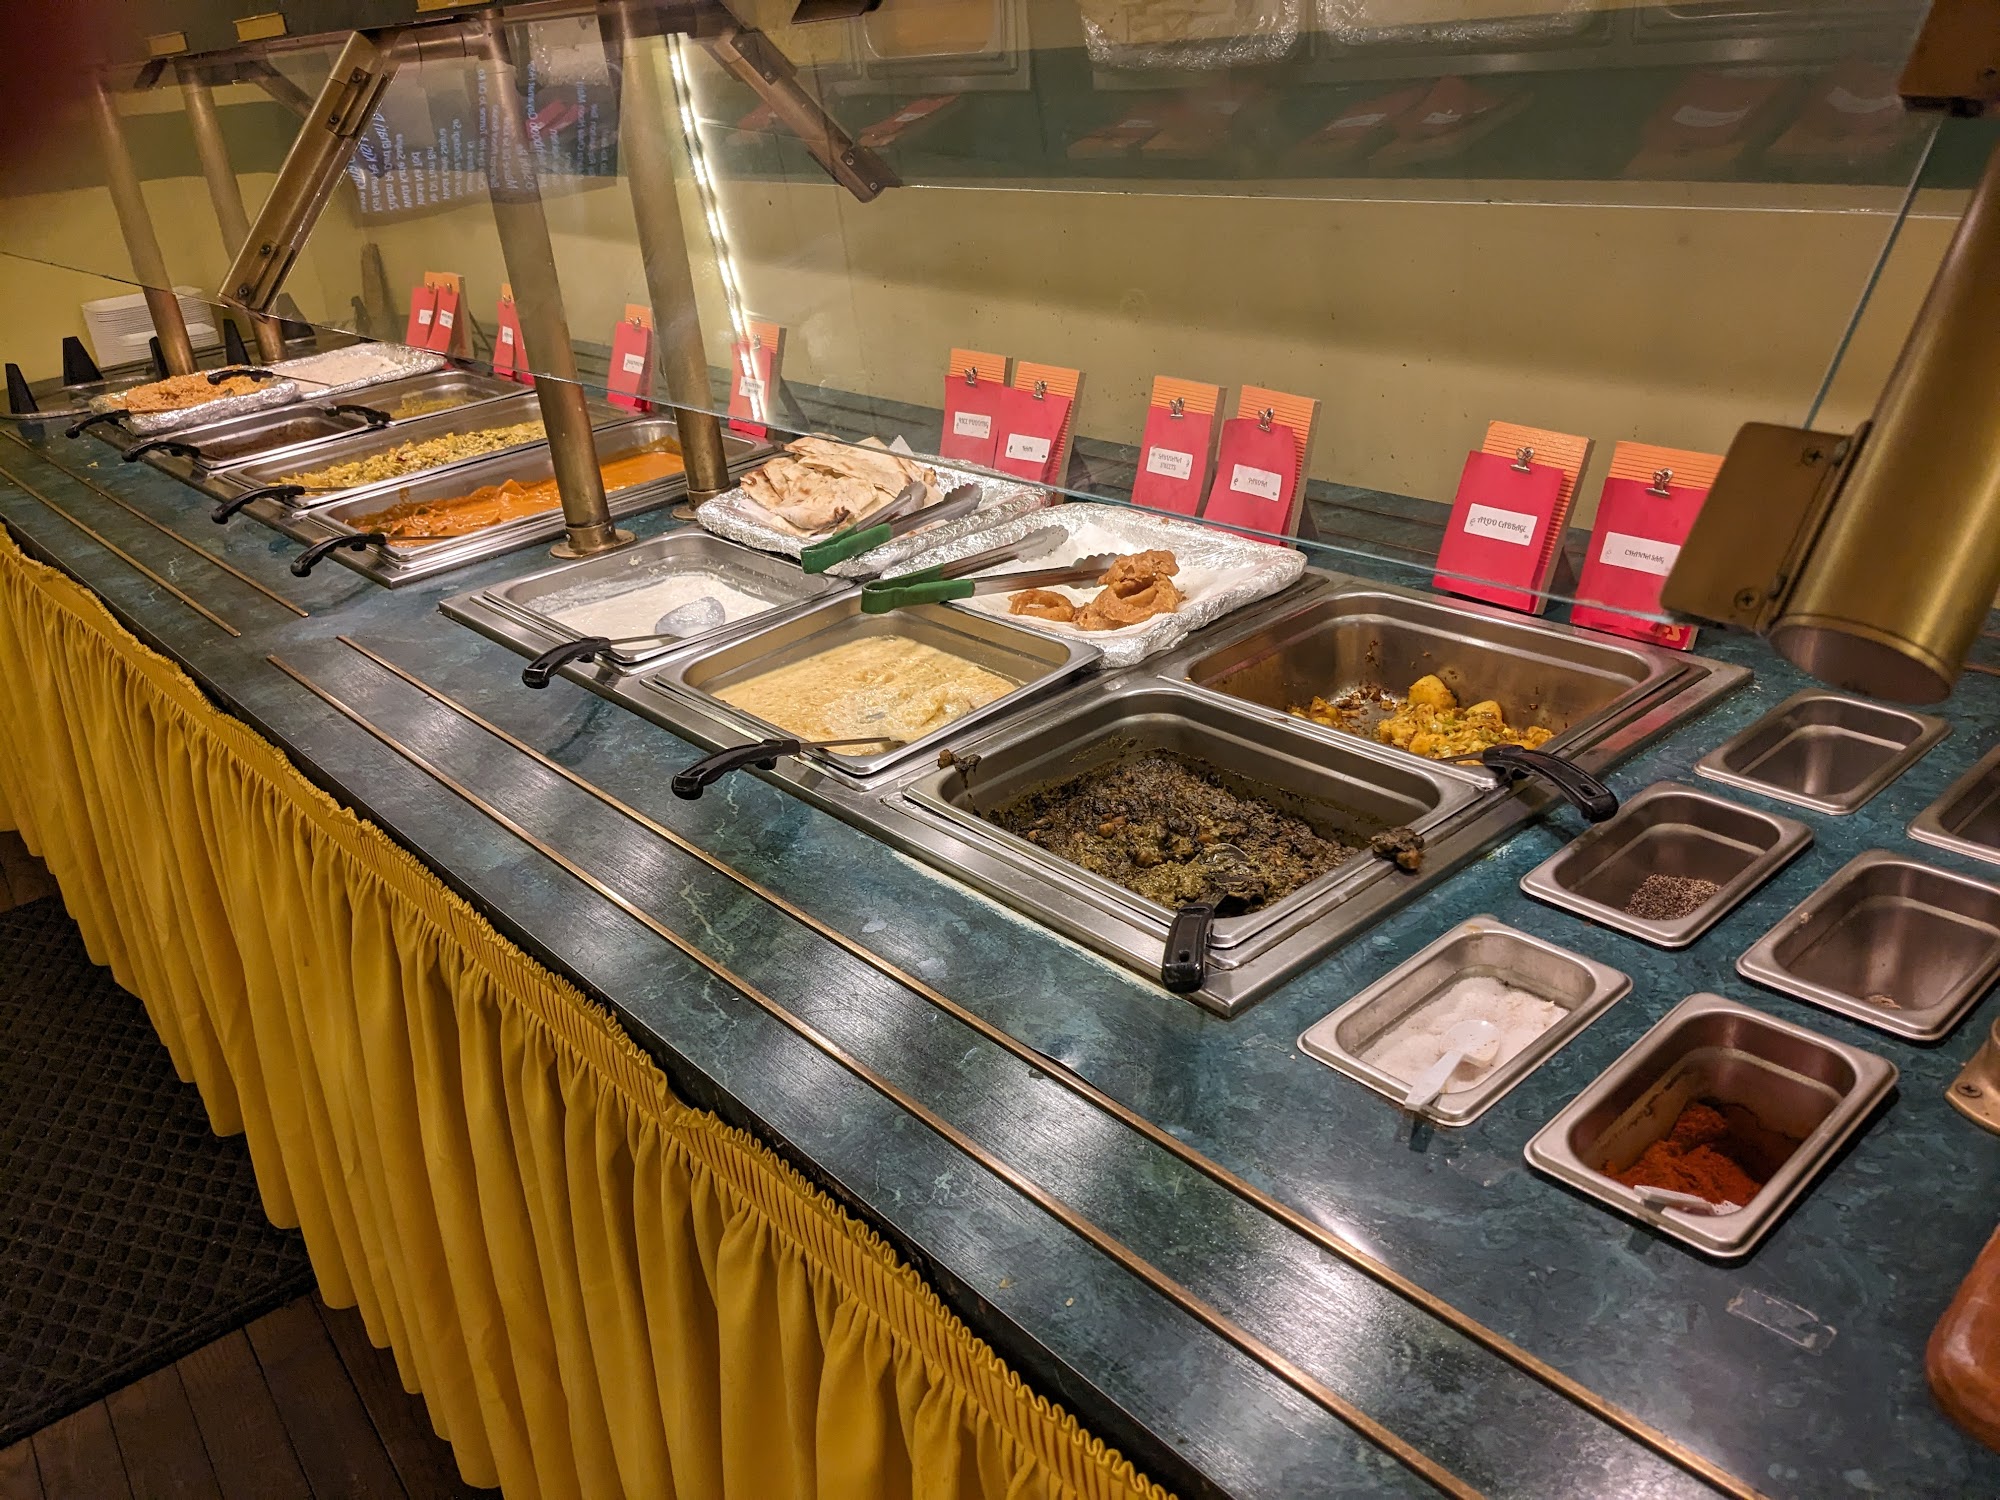 Gokul Indian Restaurant